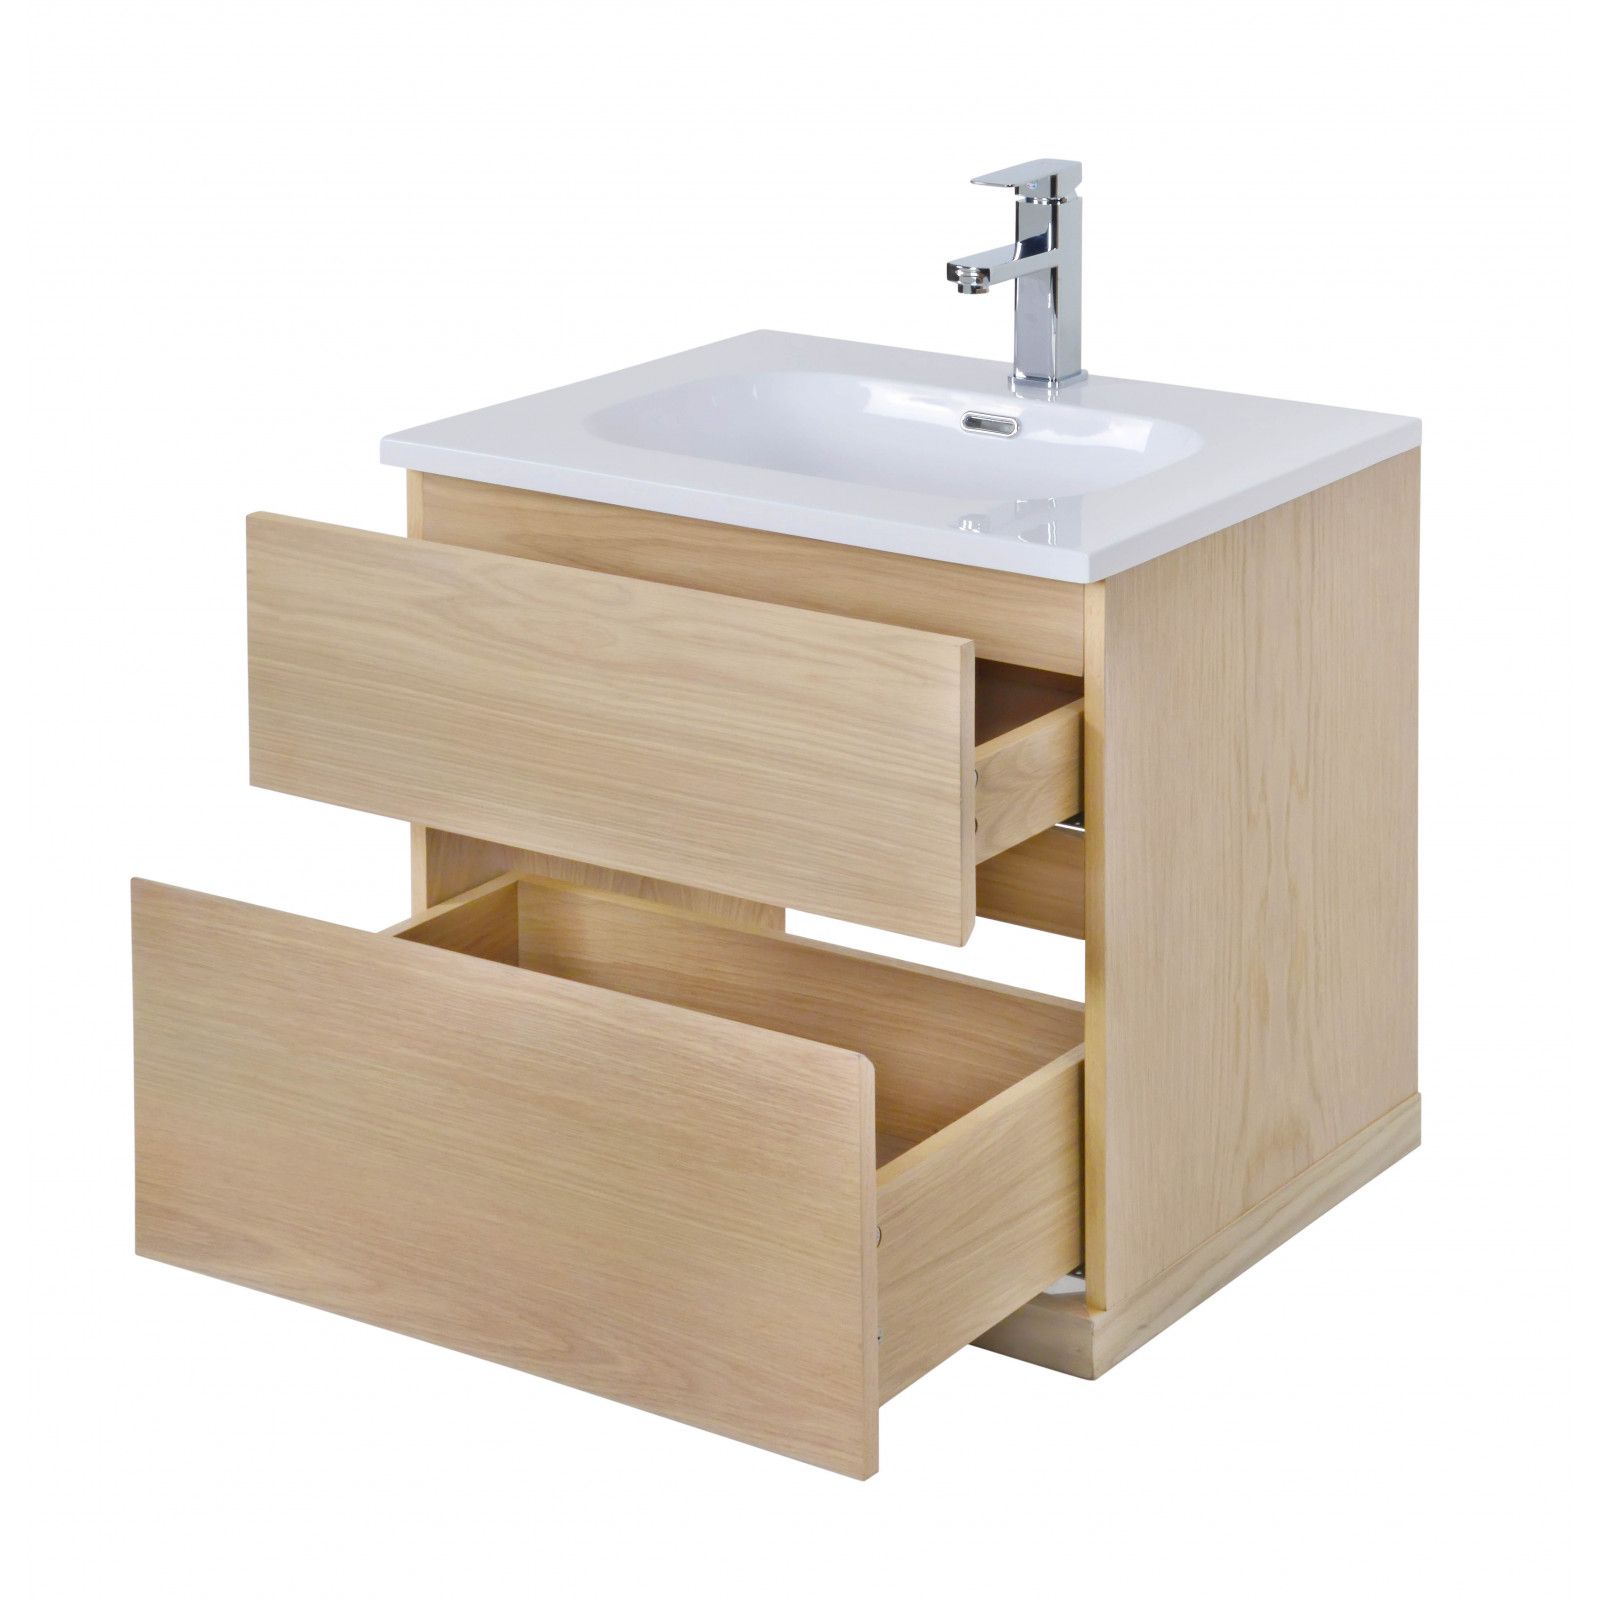 Ensemble salle de bain chêne 60 cm meuble + vasque + miroir + colonne ENIO